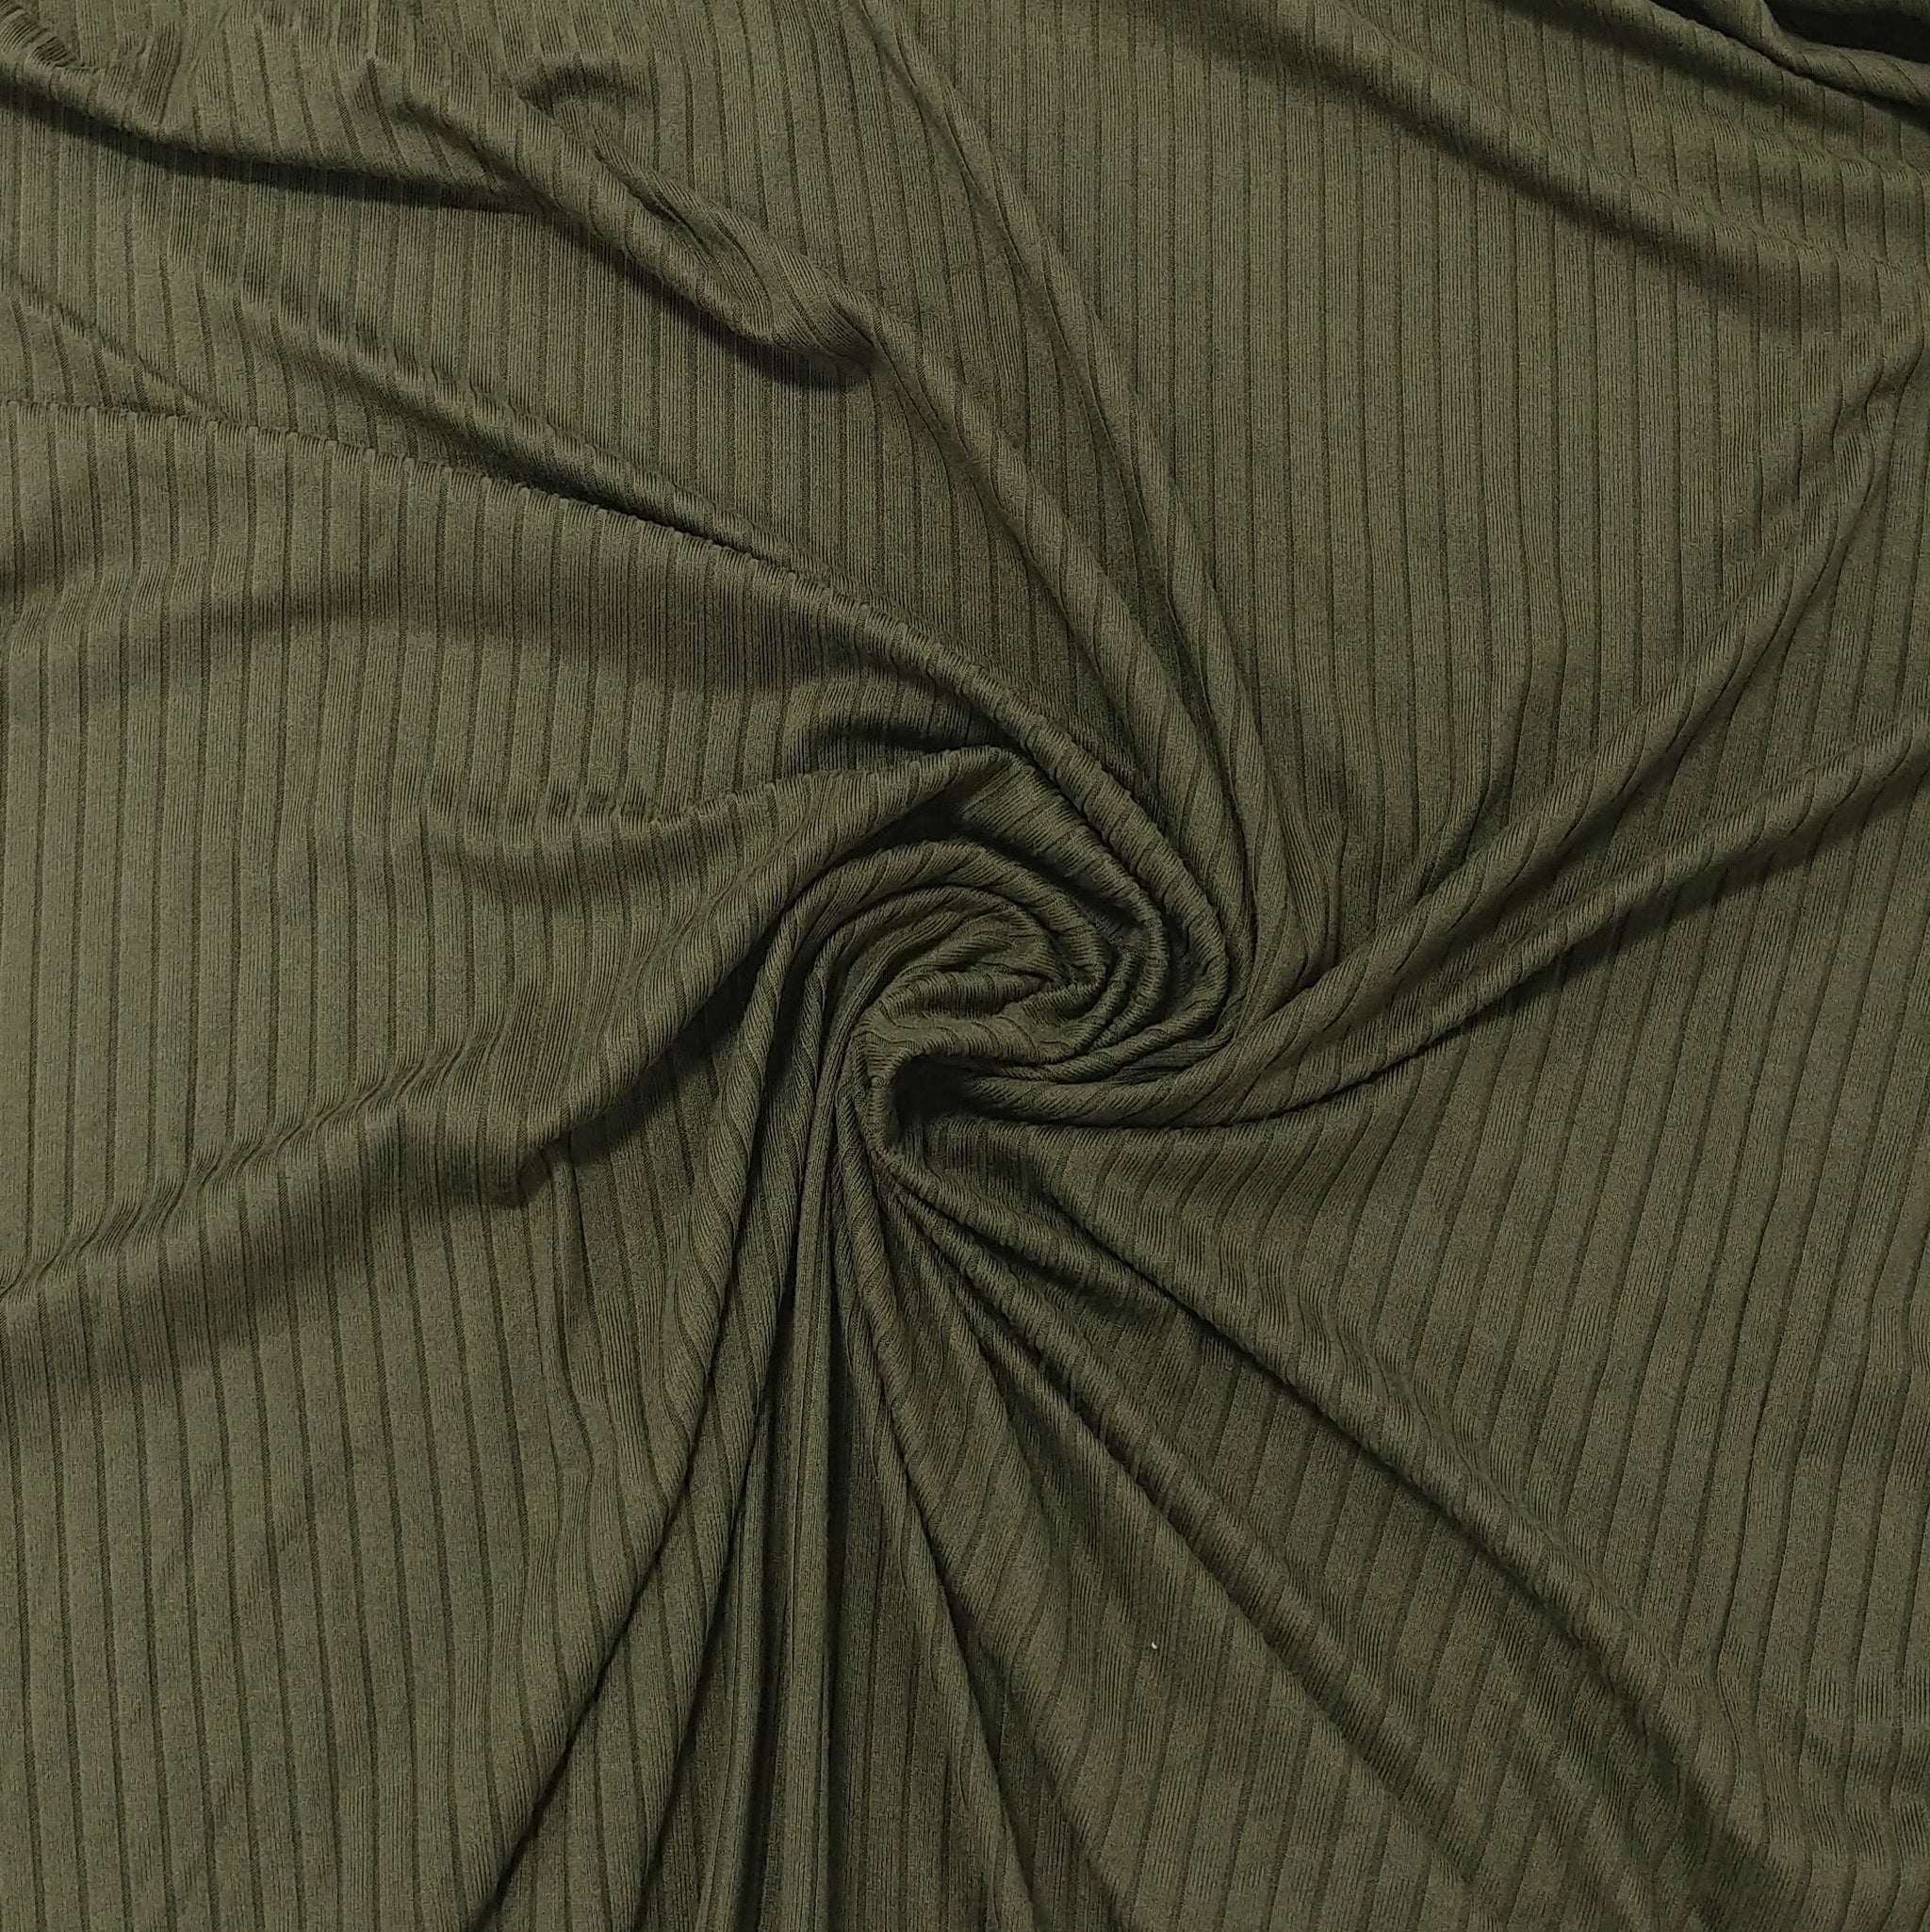 Solid Olive Green Poly Spandex 4 Way Stretch 8x3 Rib Knit Fabric